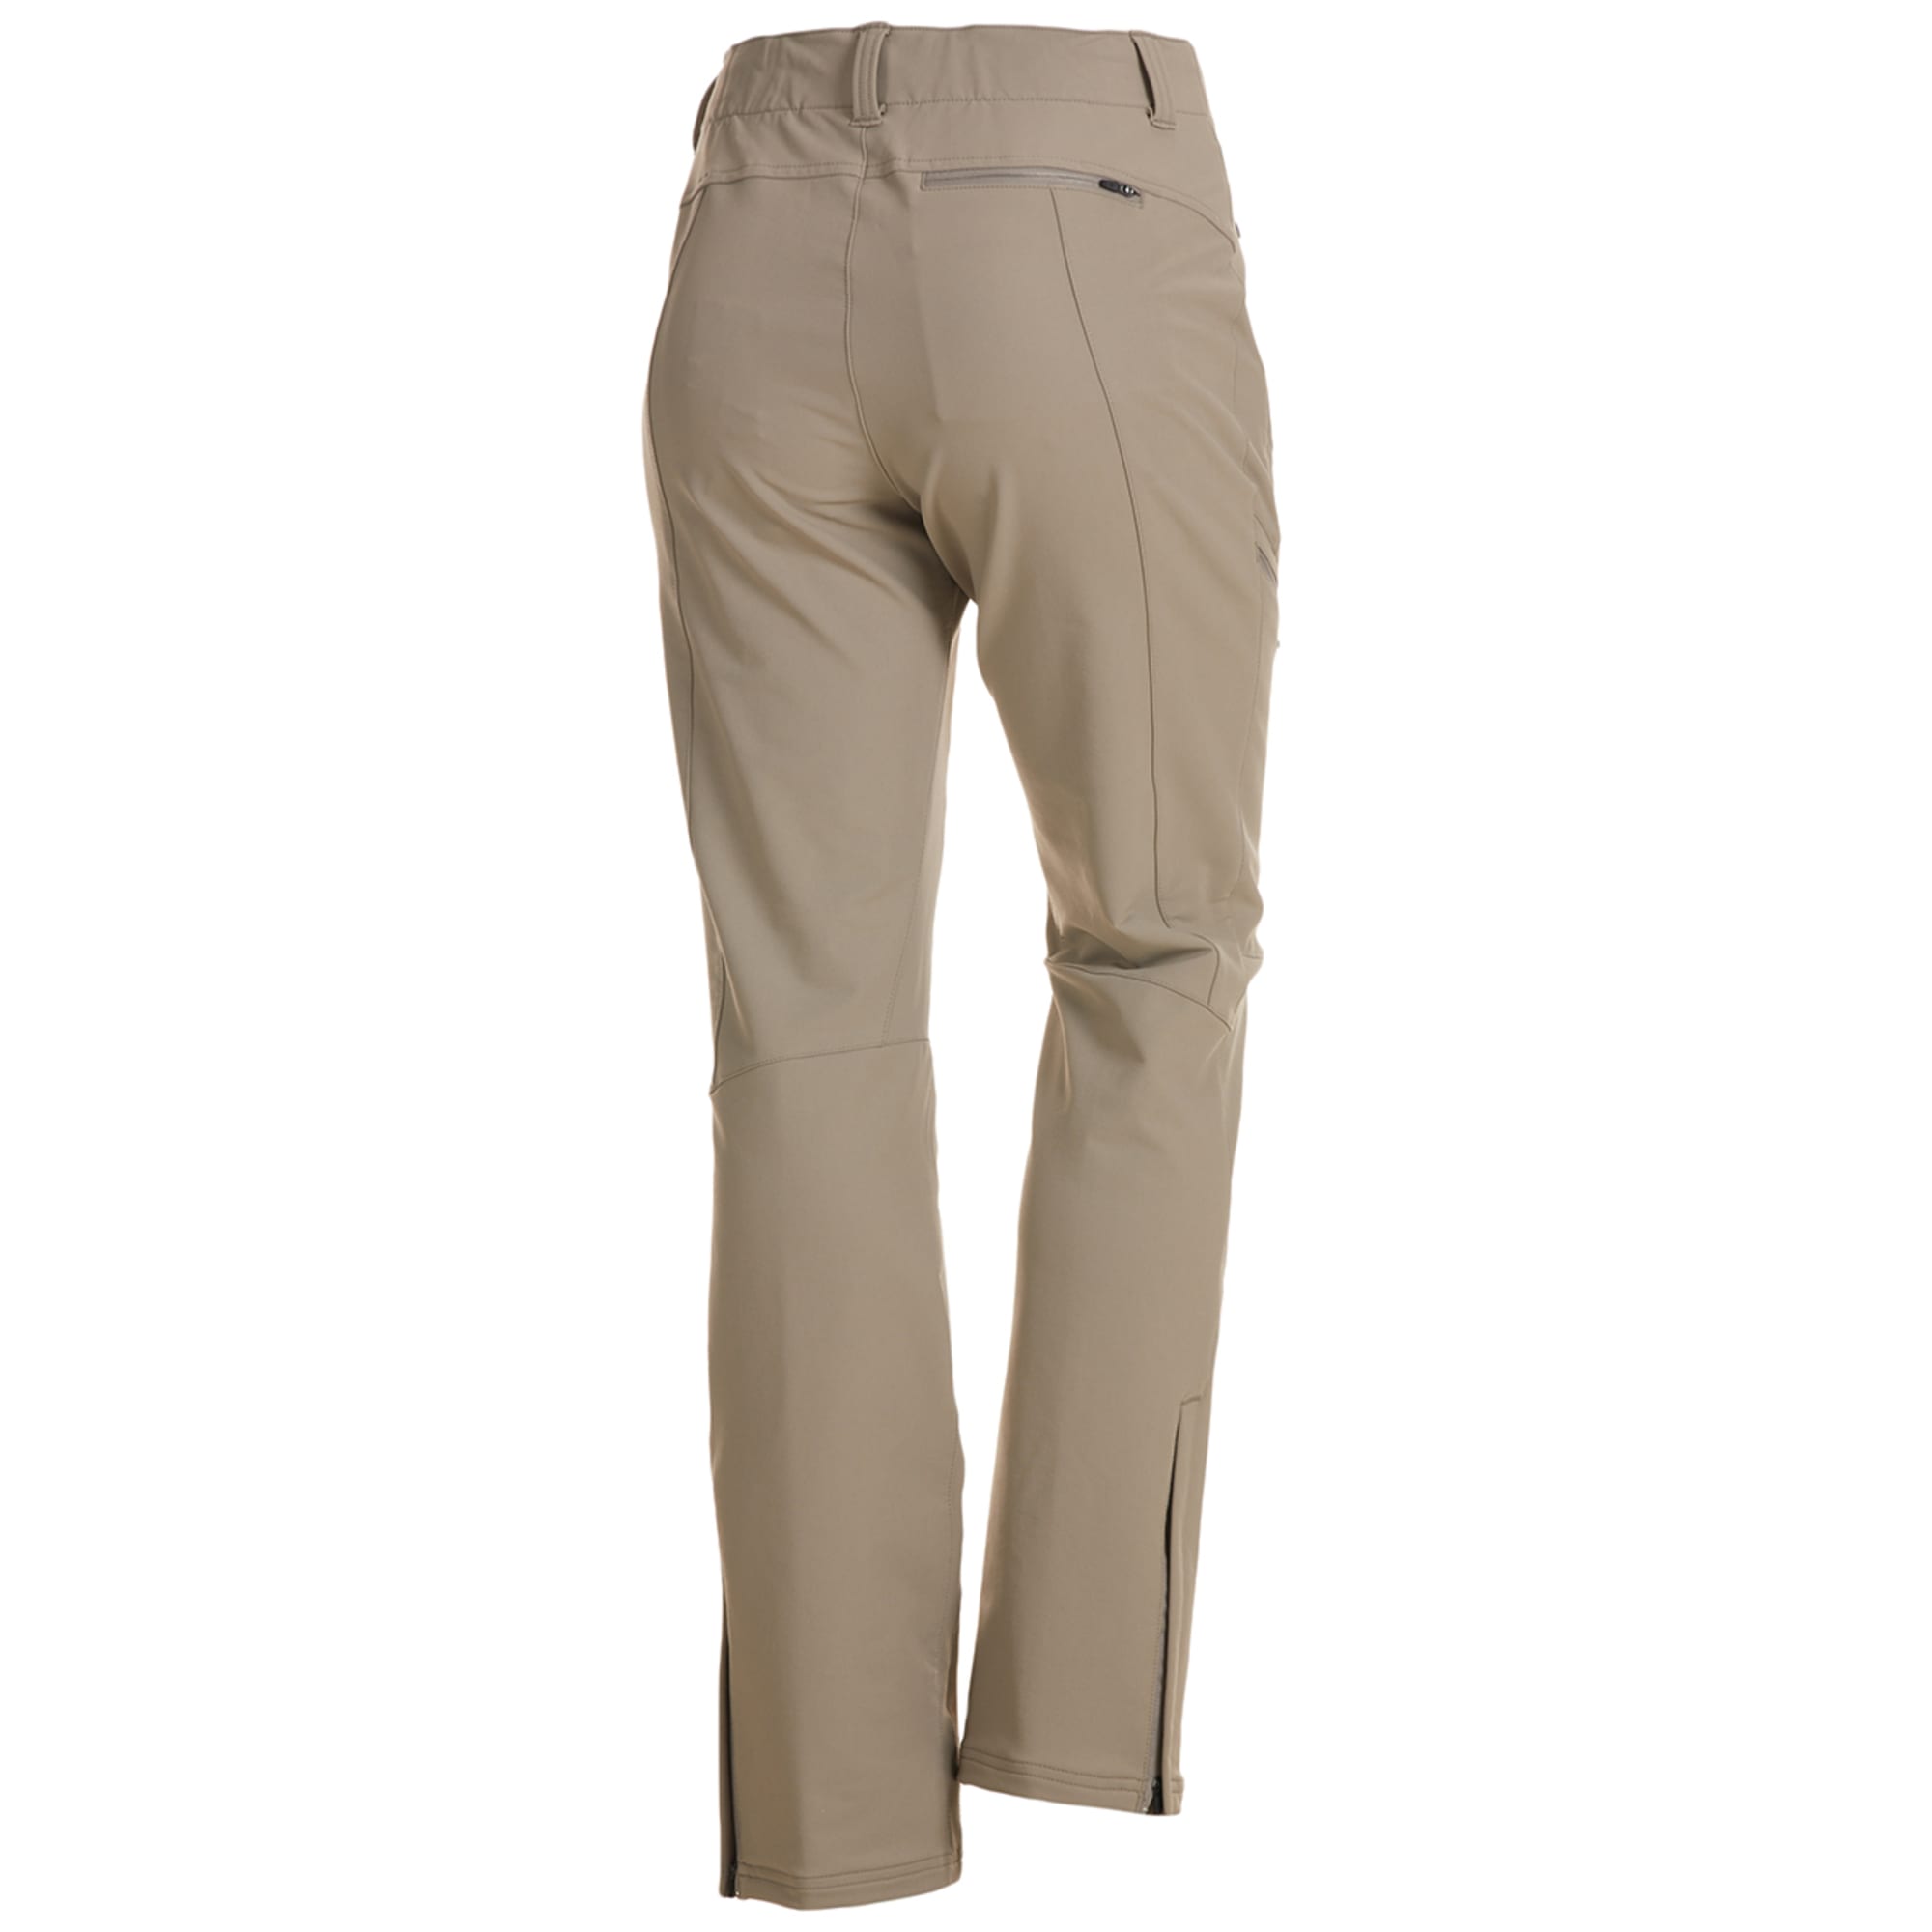 Eastern Mountain Sports, Pants & Jumpsuits, Ems Eastern Mountain Sports  Pants Size Womens Khakis Beige Tan Euc Cotton